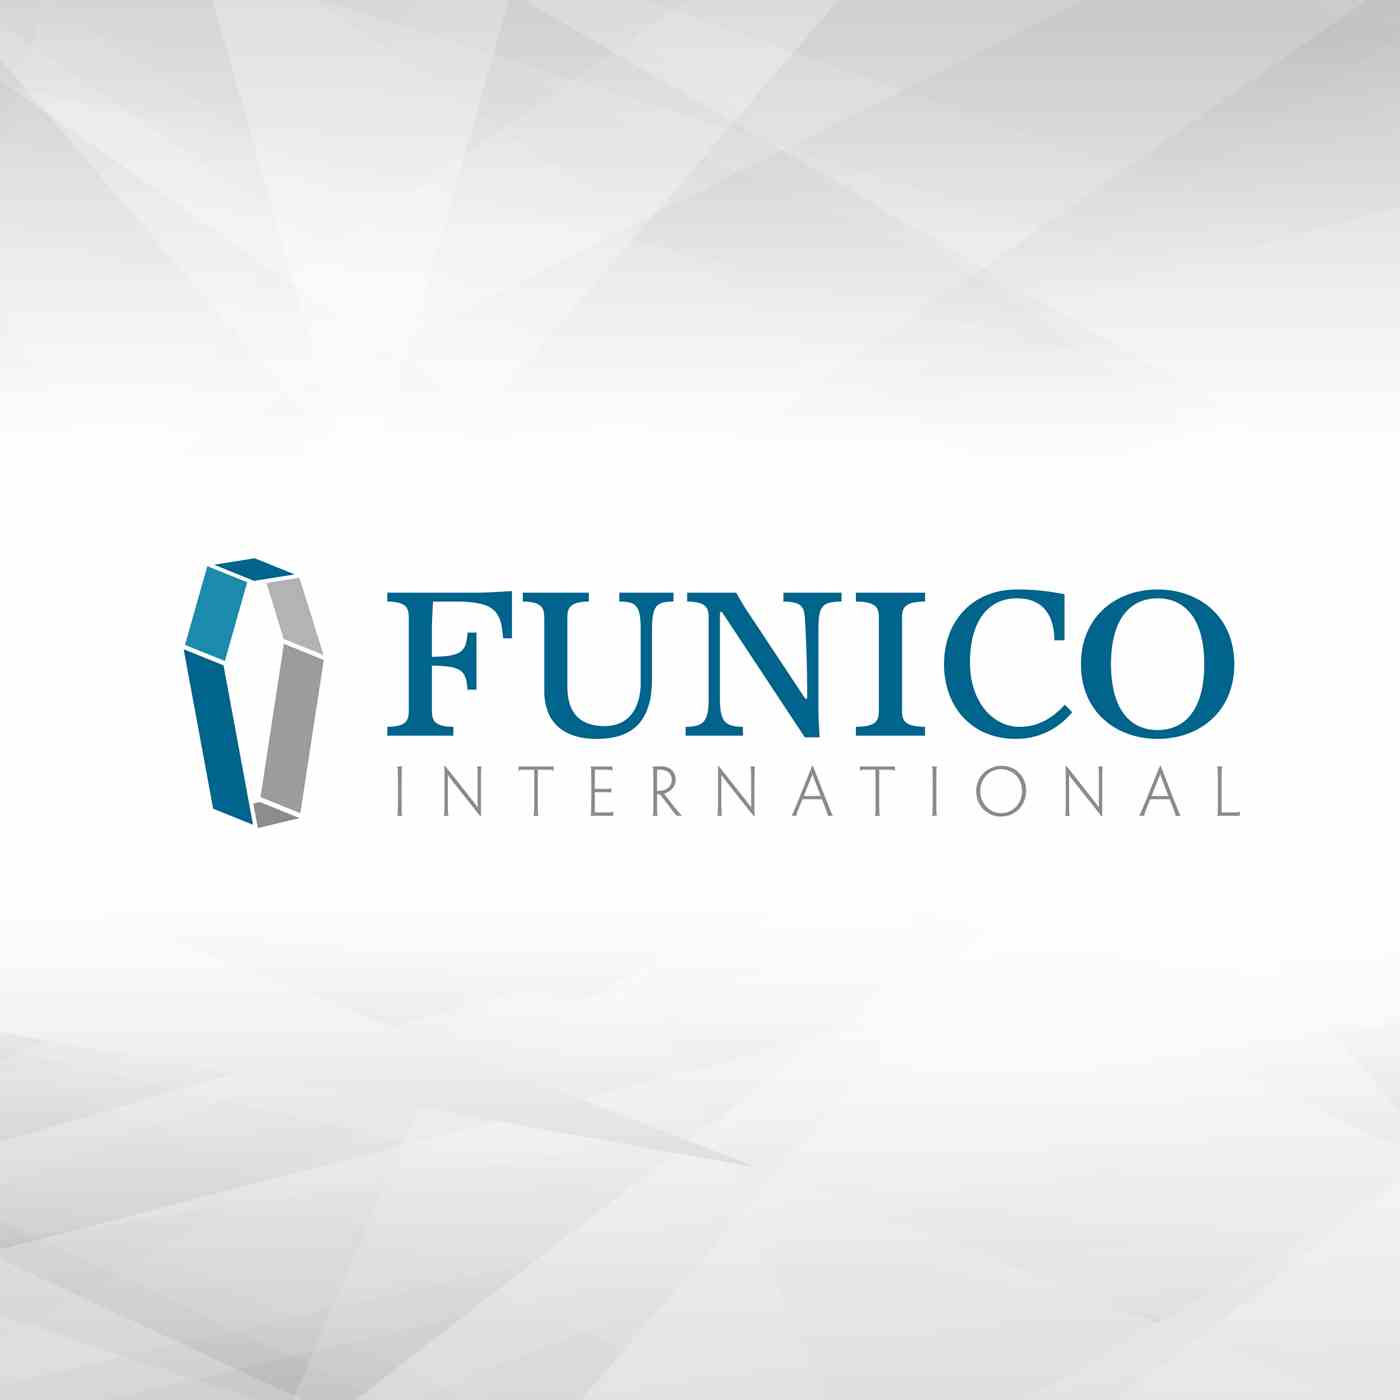 Funico logo